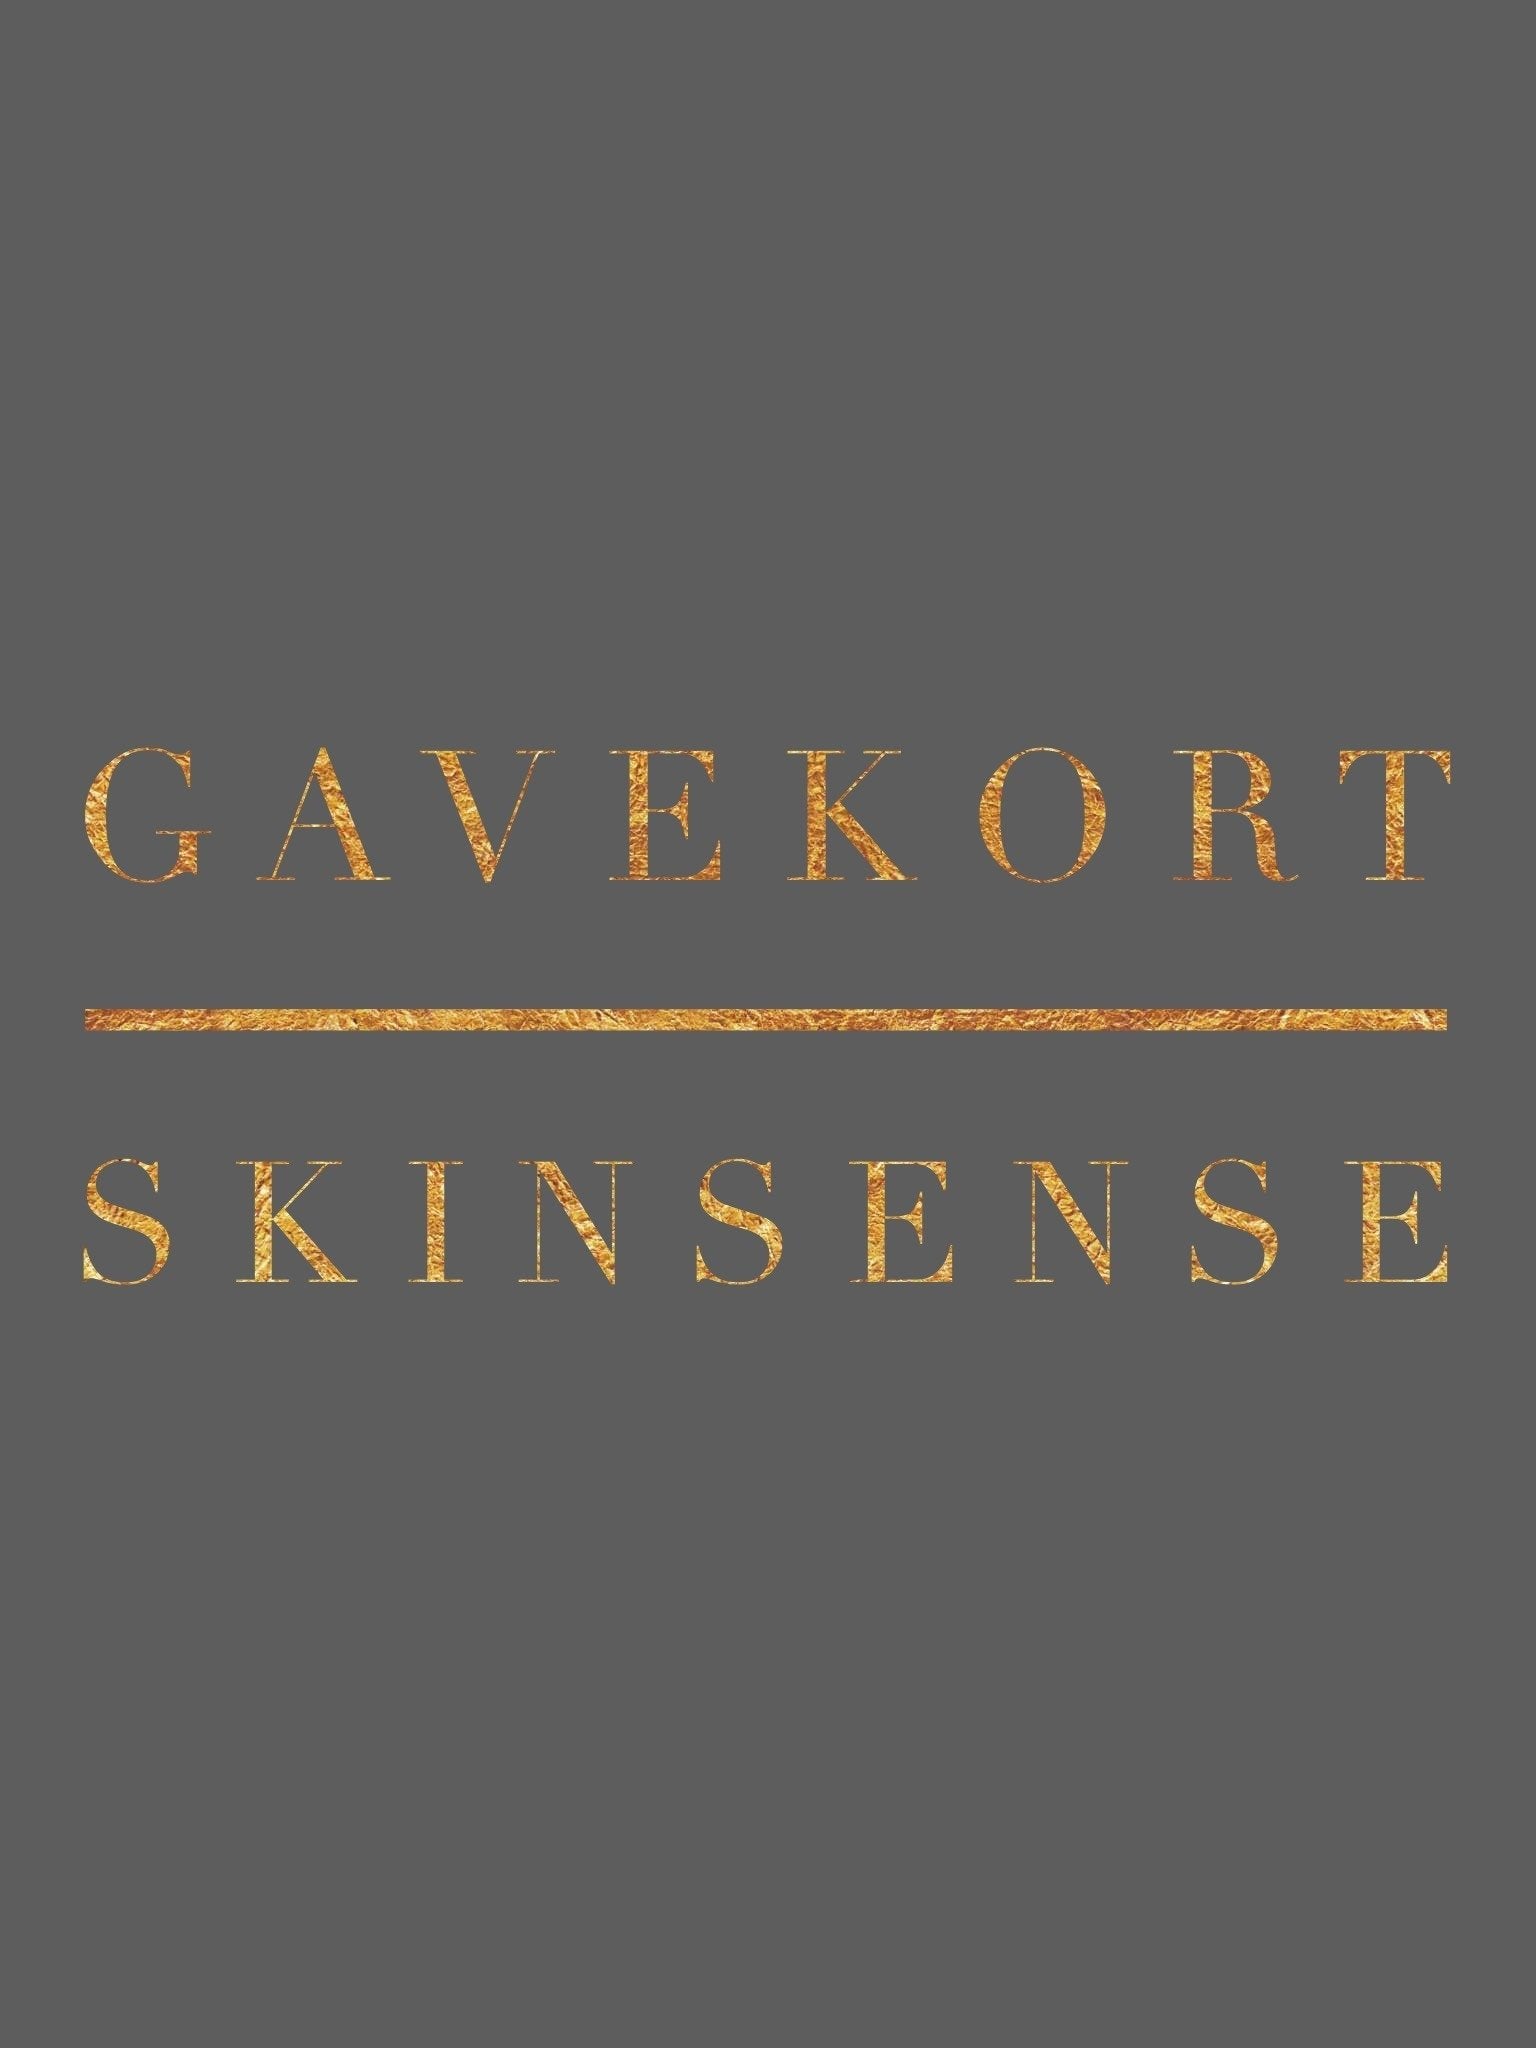 SkinSense Gavekort